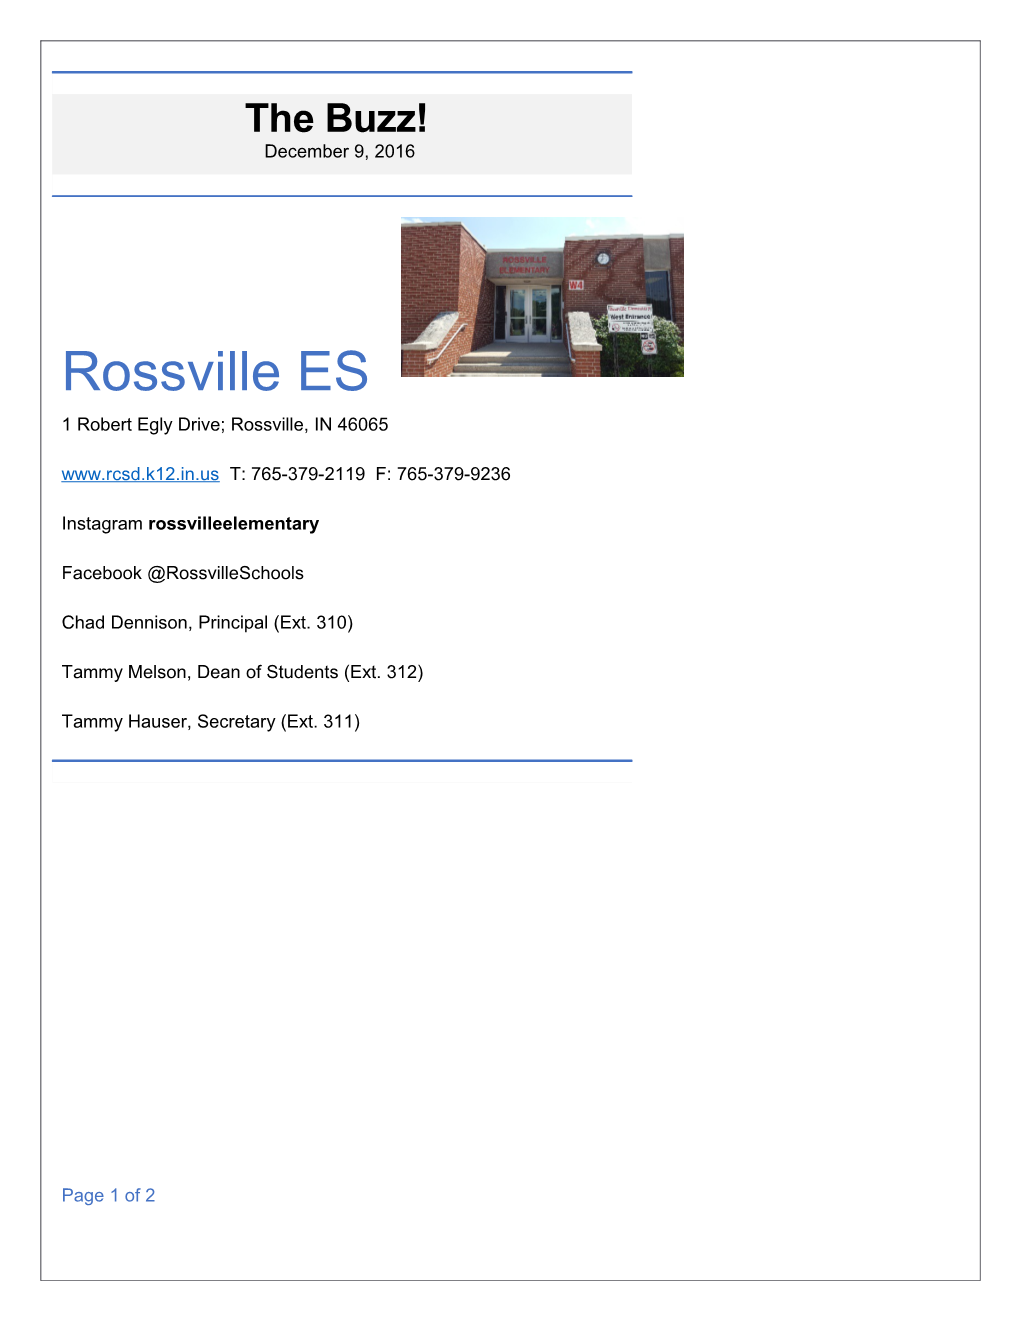 1 Robert Egly Drive; Rossville, in 46065